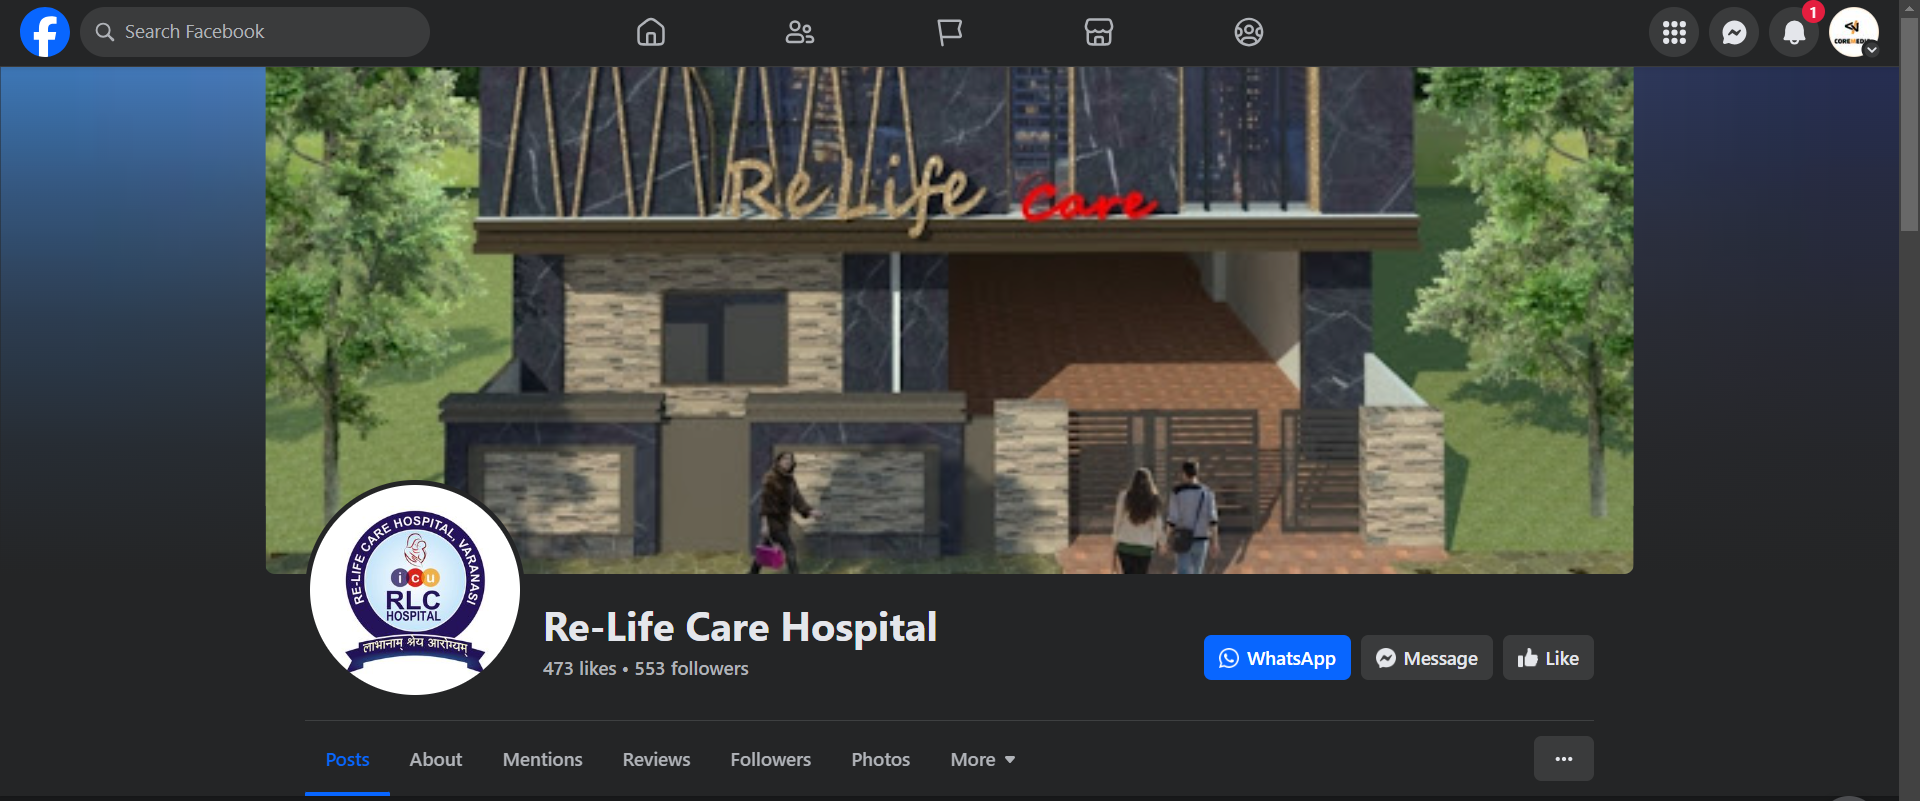 Relife Care Hospital